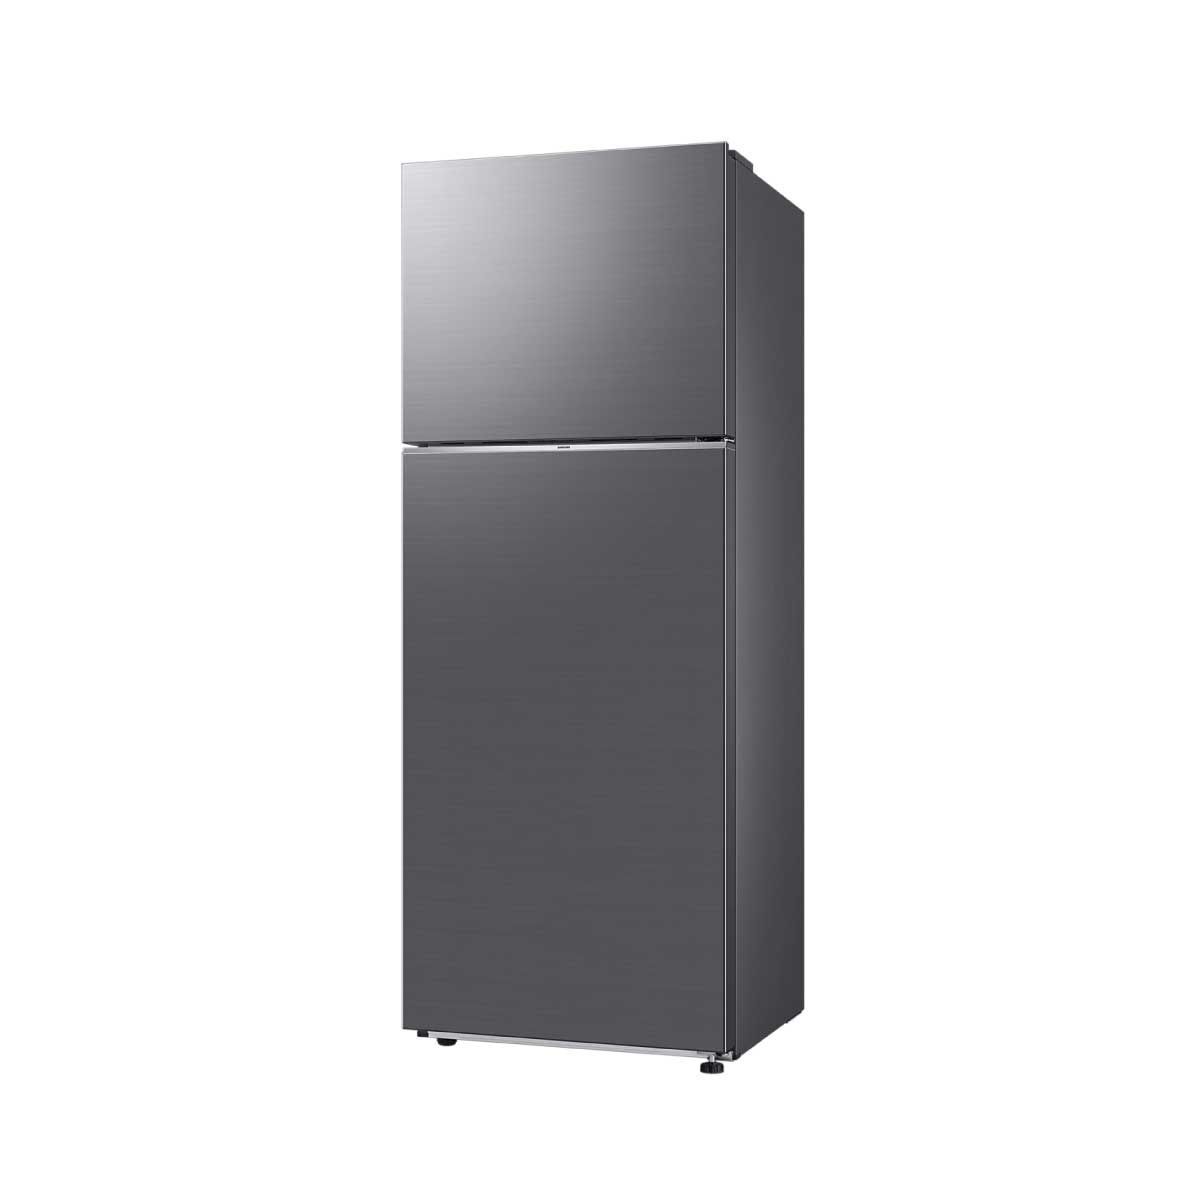 SAMSUNG ตู้เย็น 2 ประตู พร้อมด้วย AI Energy Mode, 465 L สีเงิน  รุ่น RT47CG6644S9ST